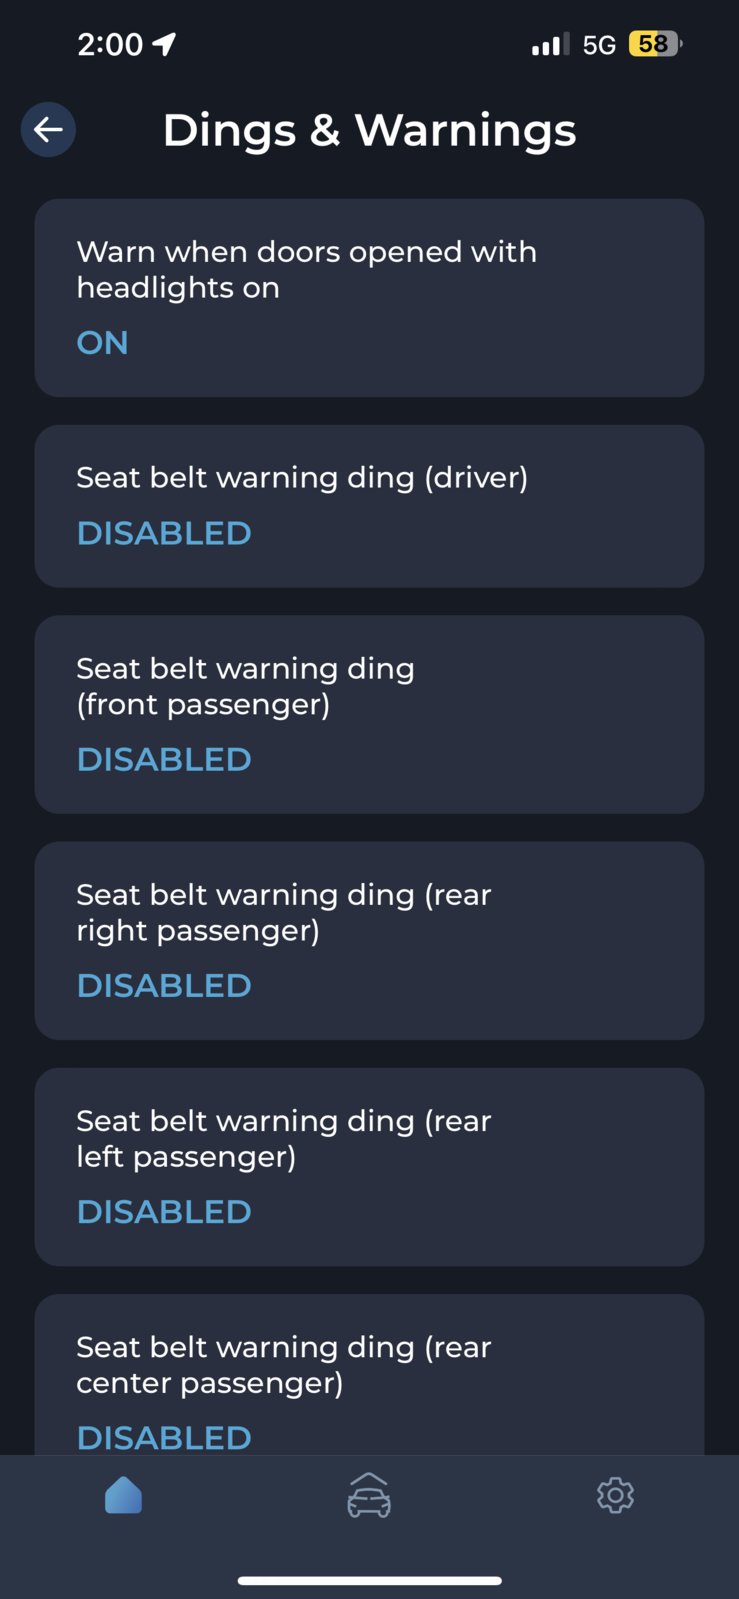 Finally got rid of those annoying no seatbelt ding noises